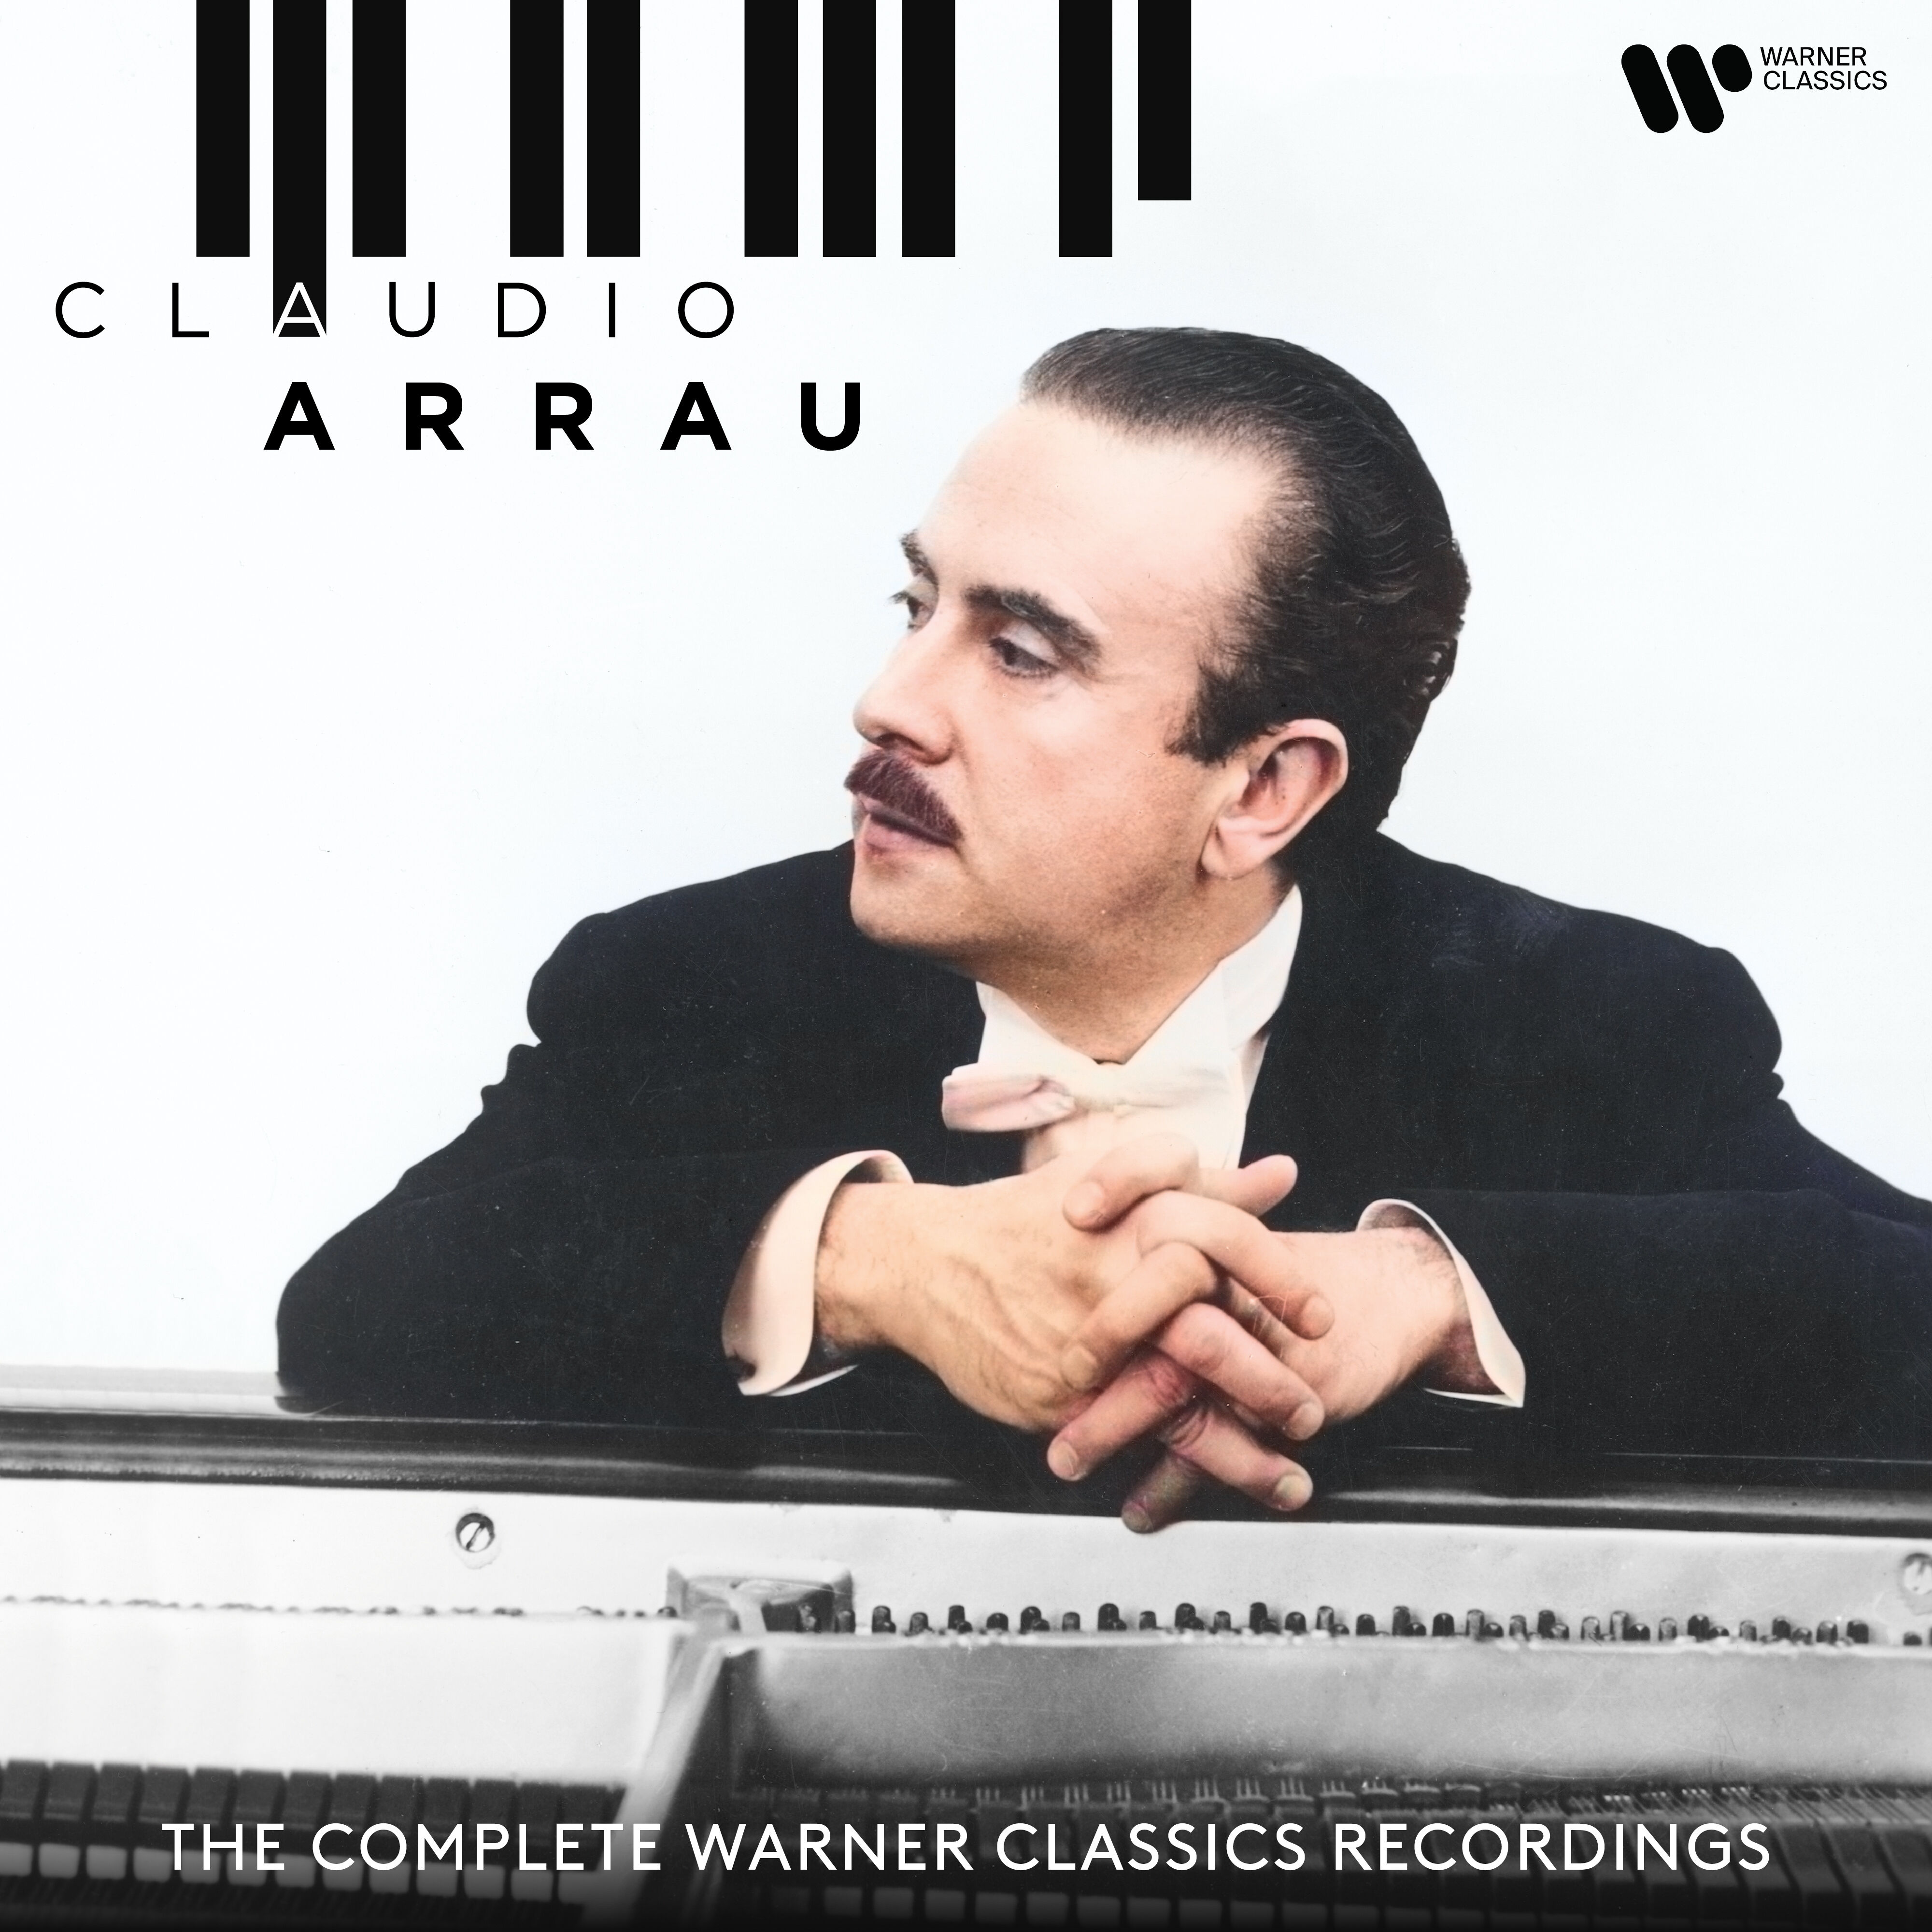 Claudio Arrau - The Complete Warner Classics Recordings - 02 of 10 14b192